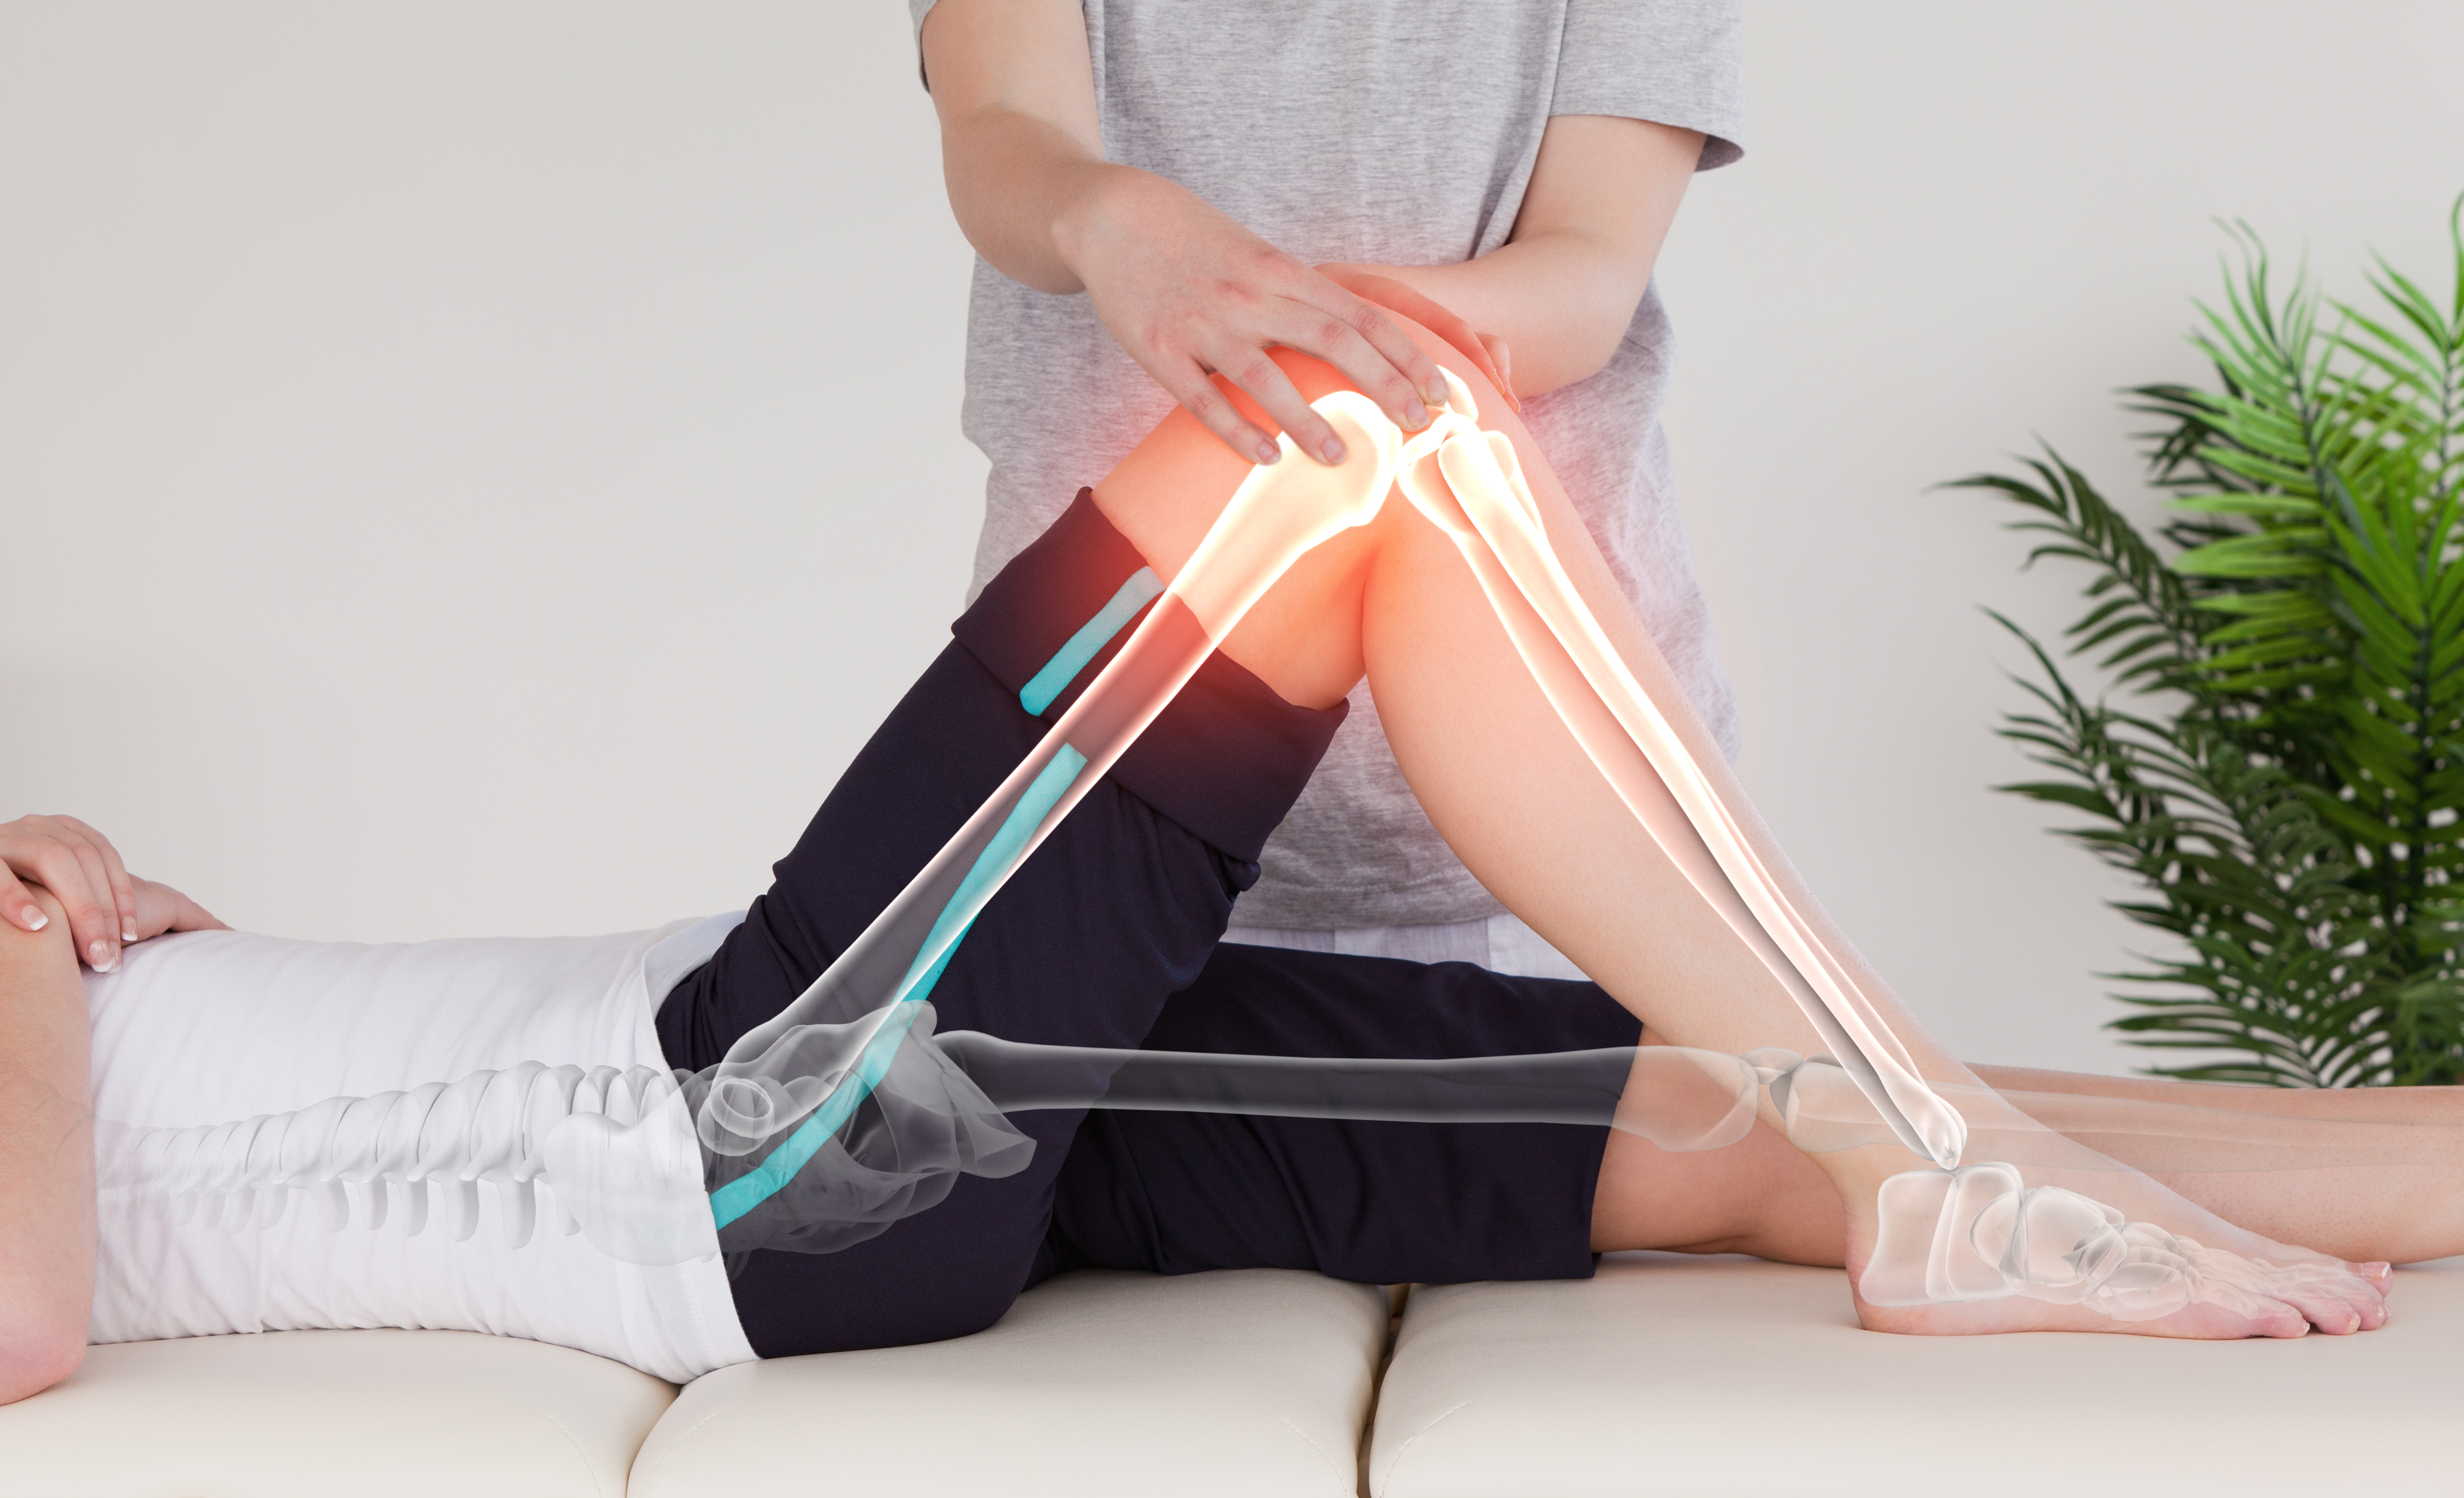 Illuminated leg and spine photo